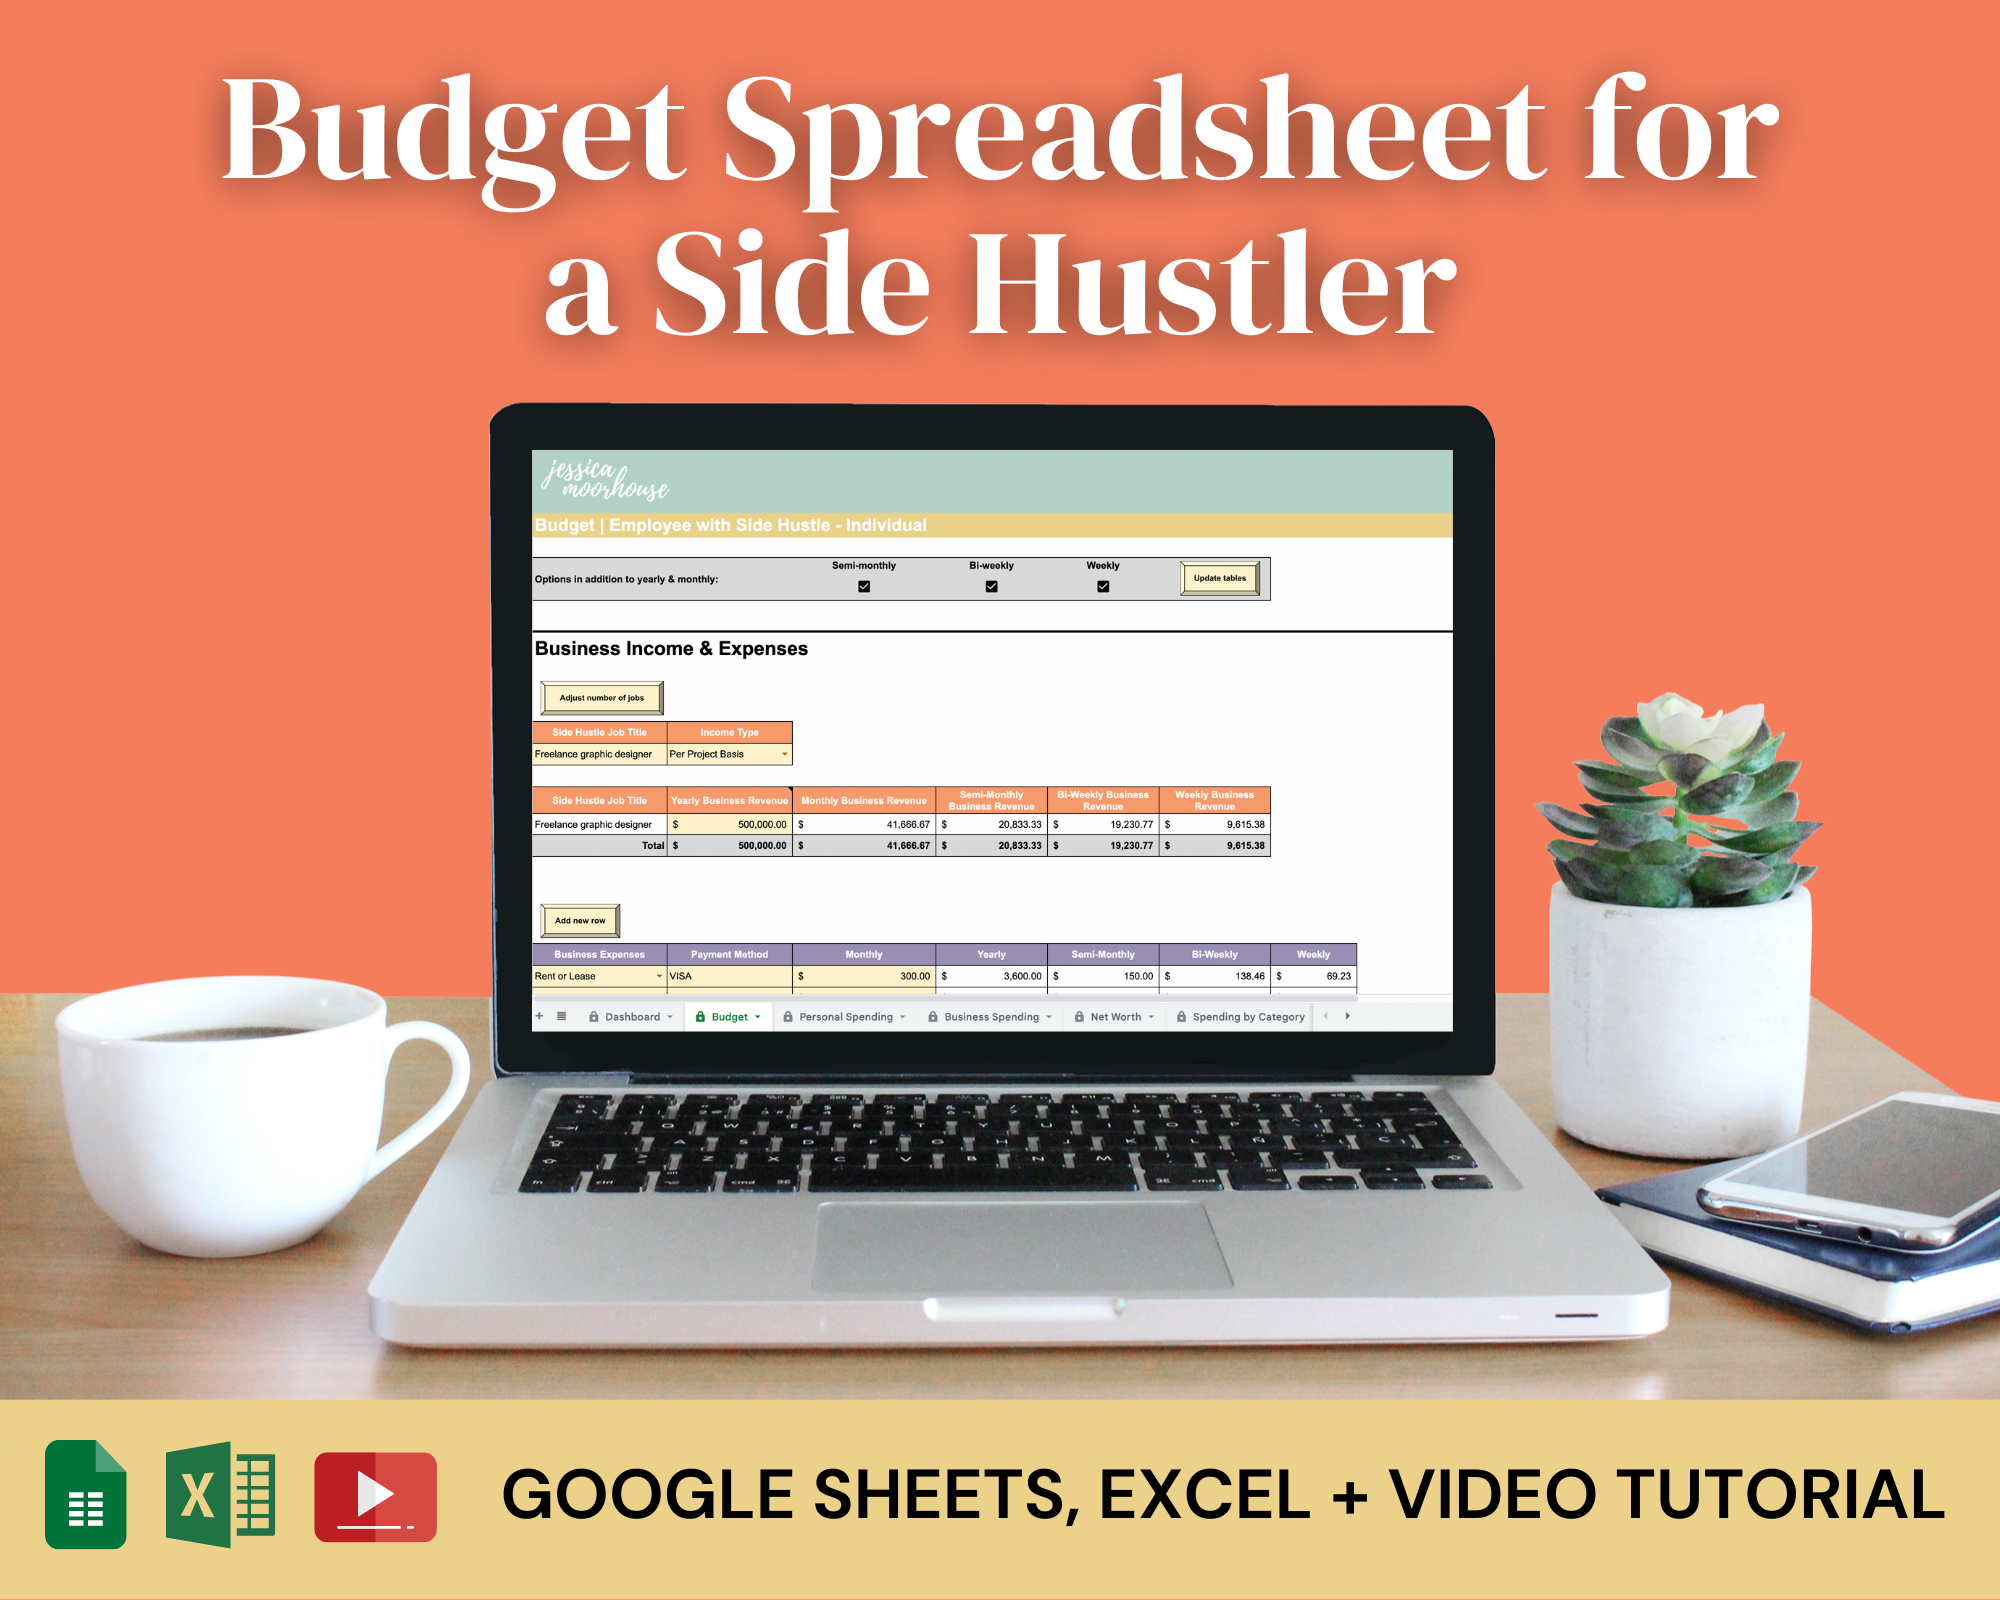 Budget Spreadsheet | Employee with Side Hustle - Individual